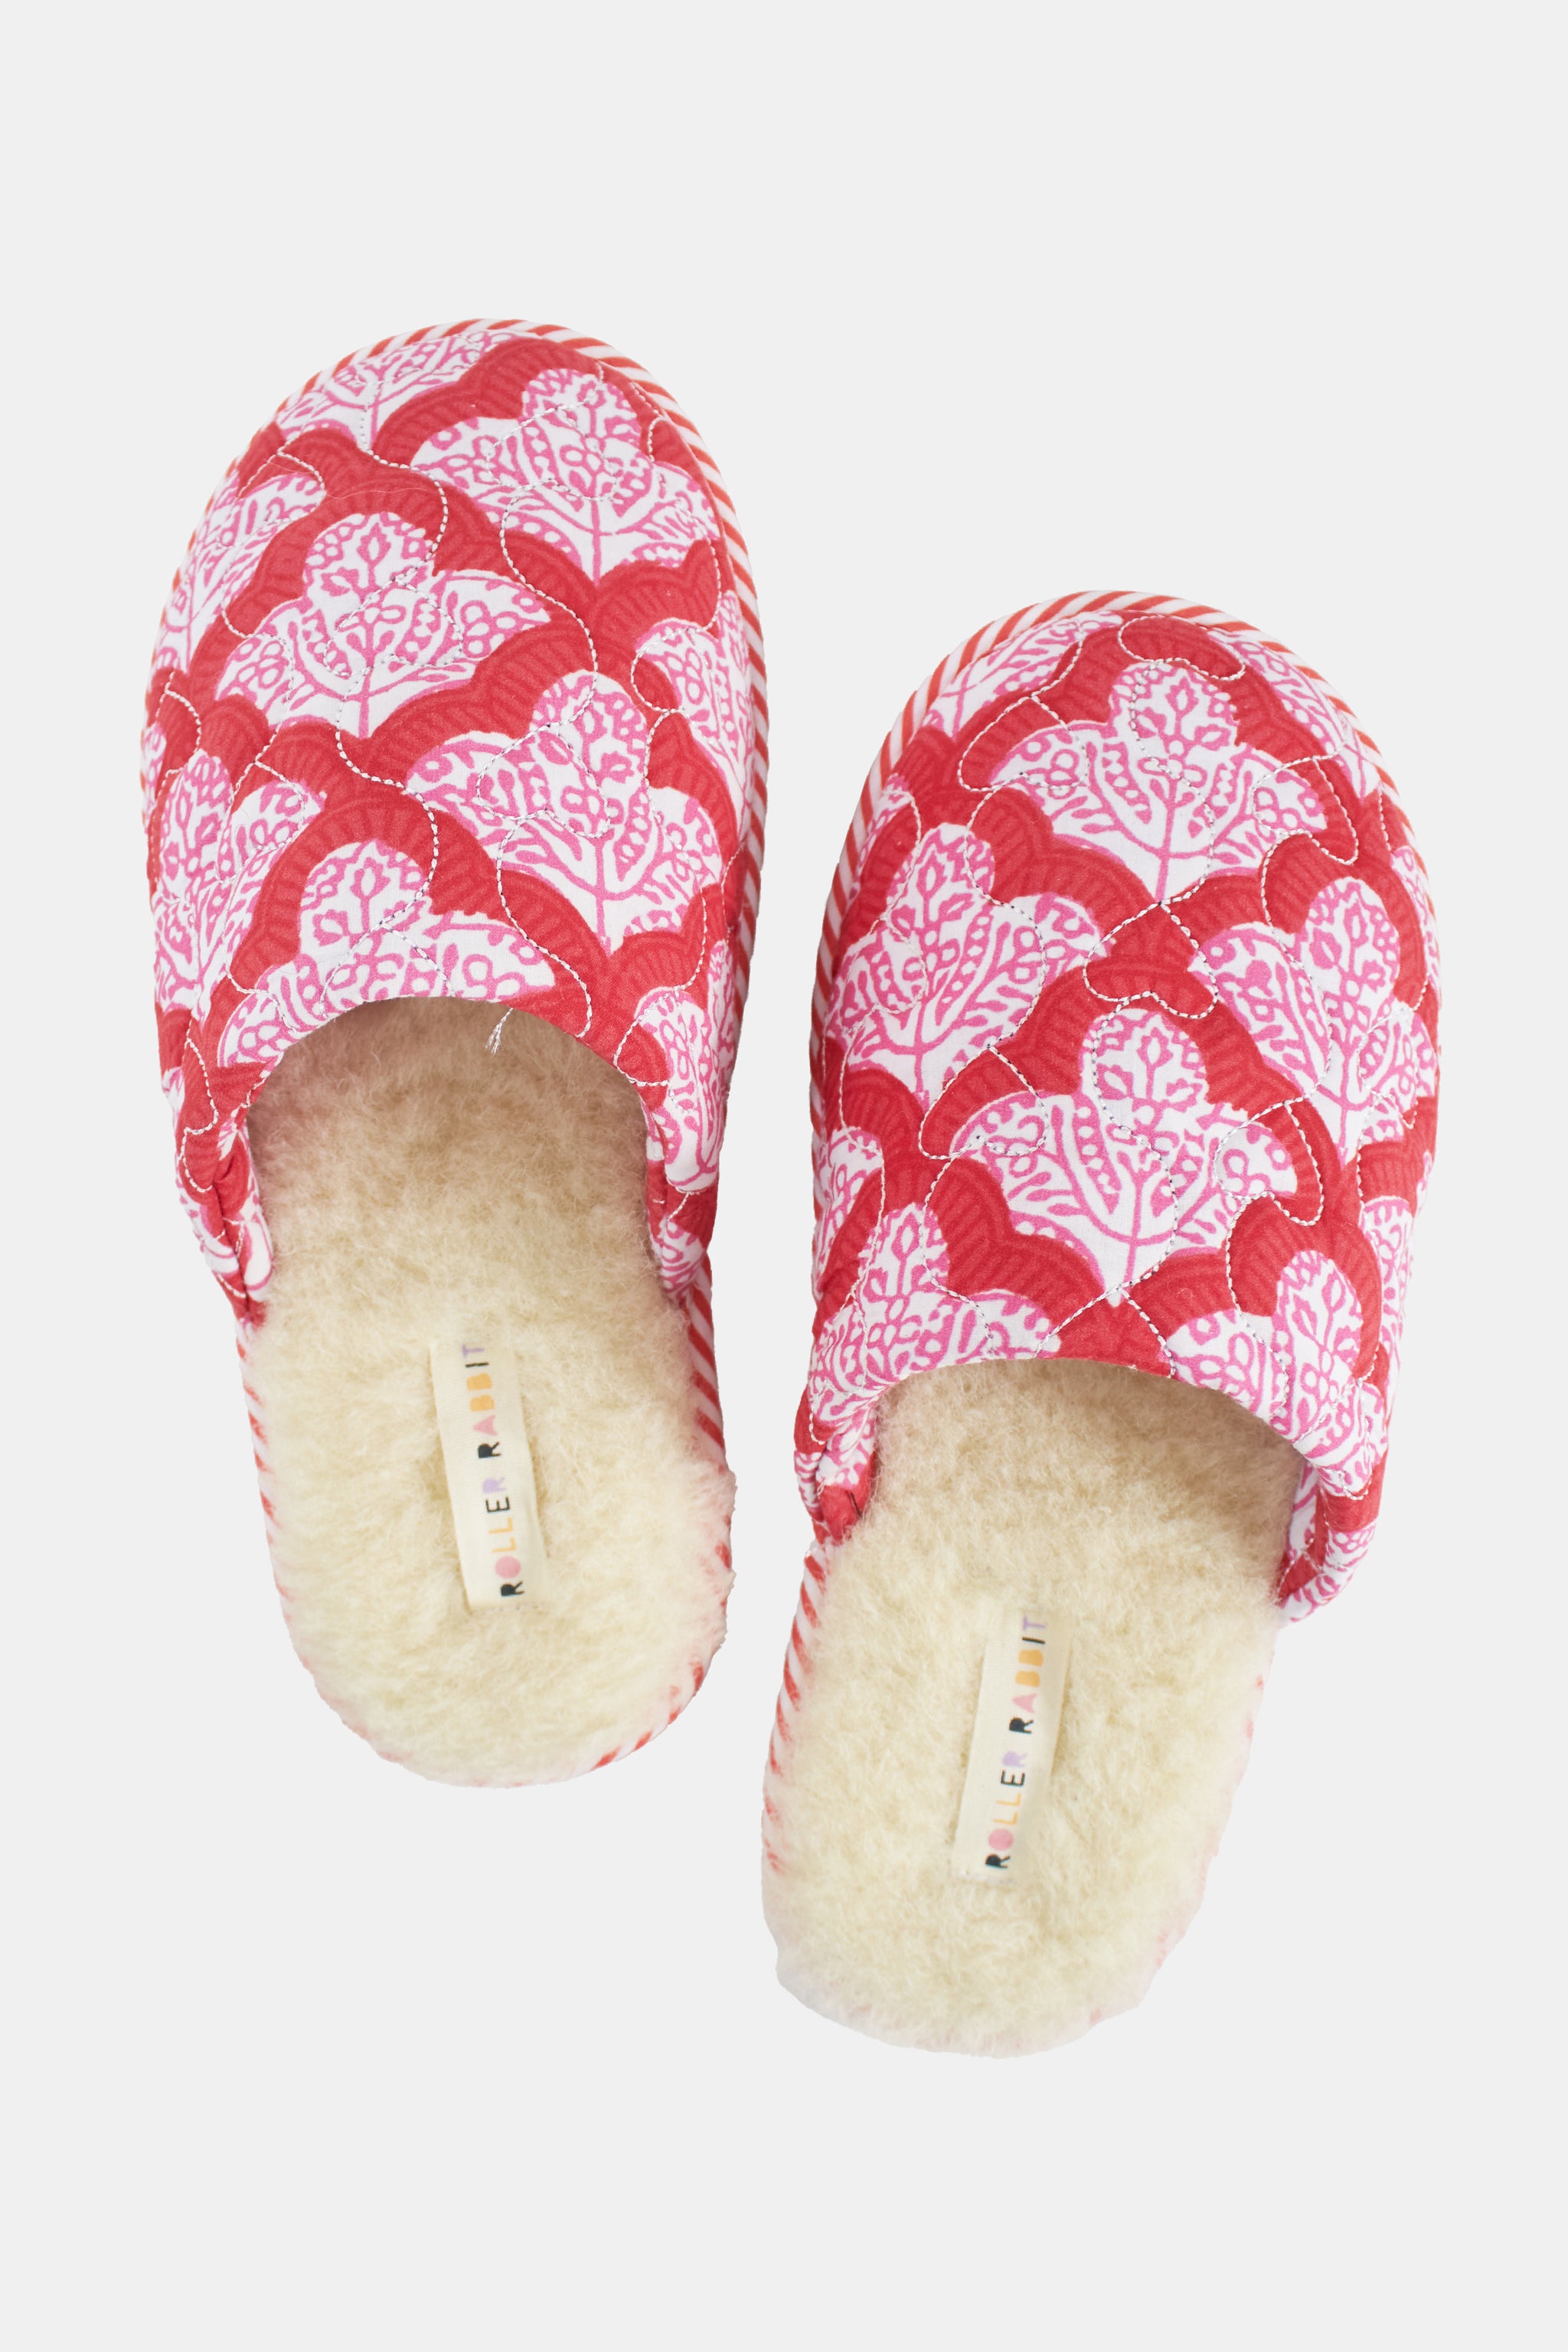 LV Mink Slippers - Pink